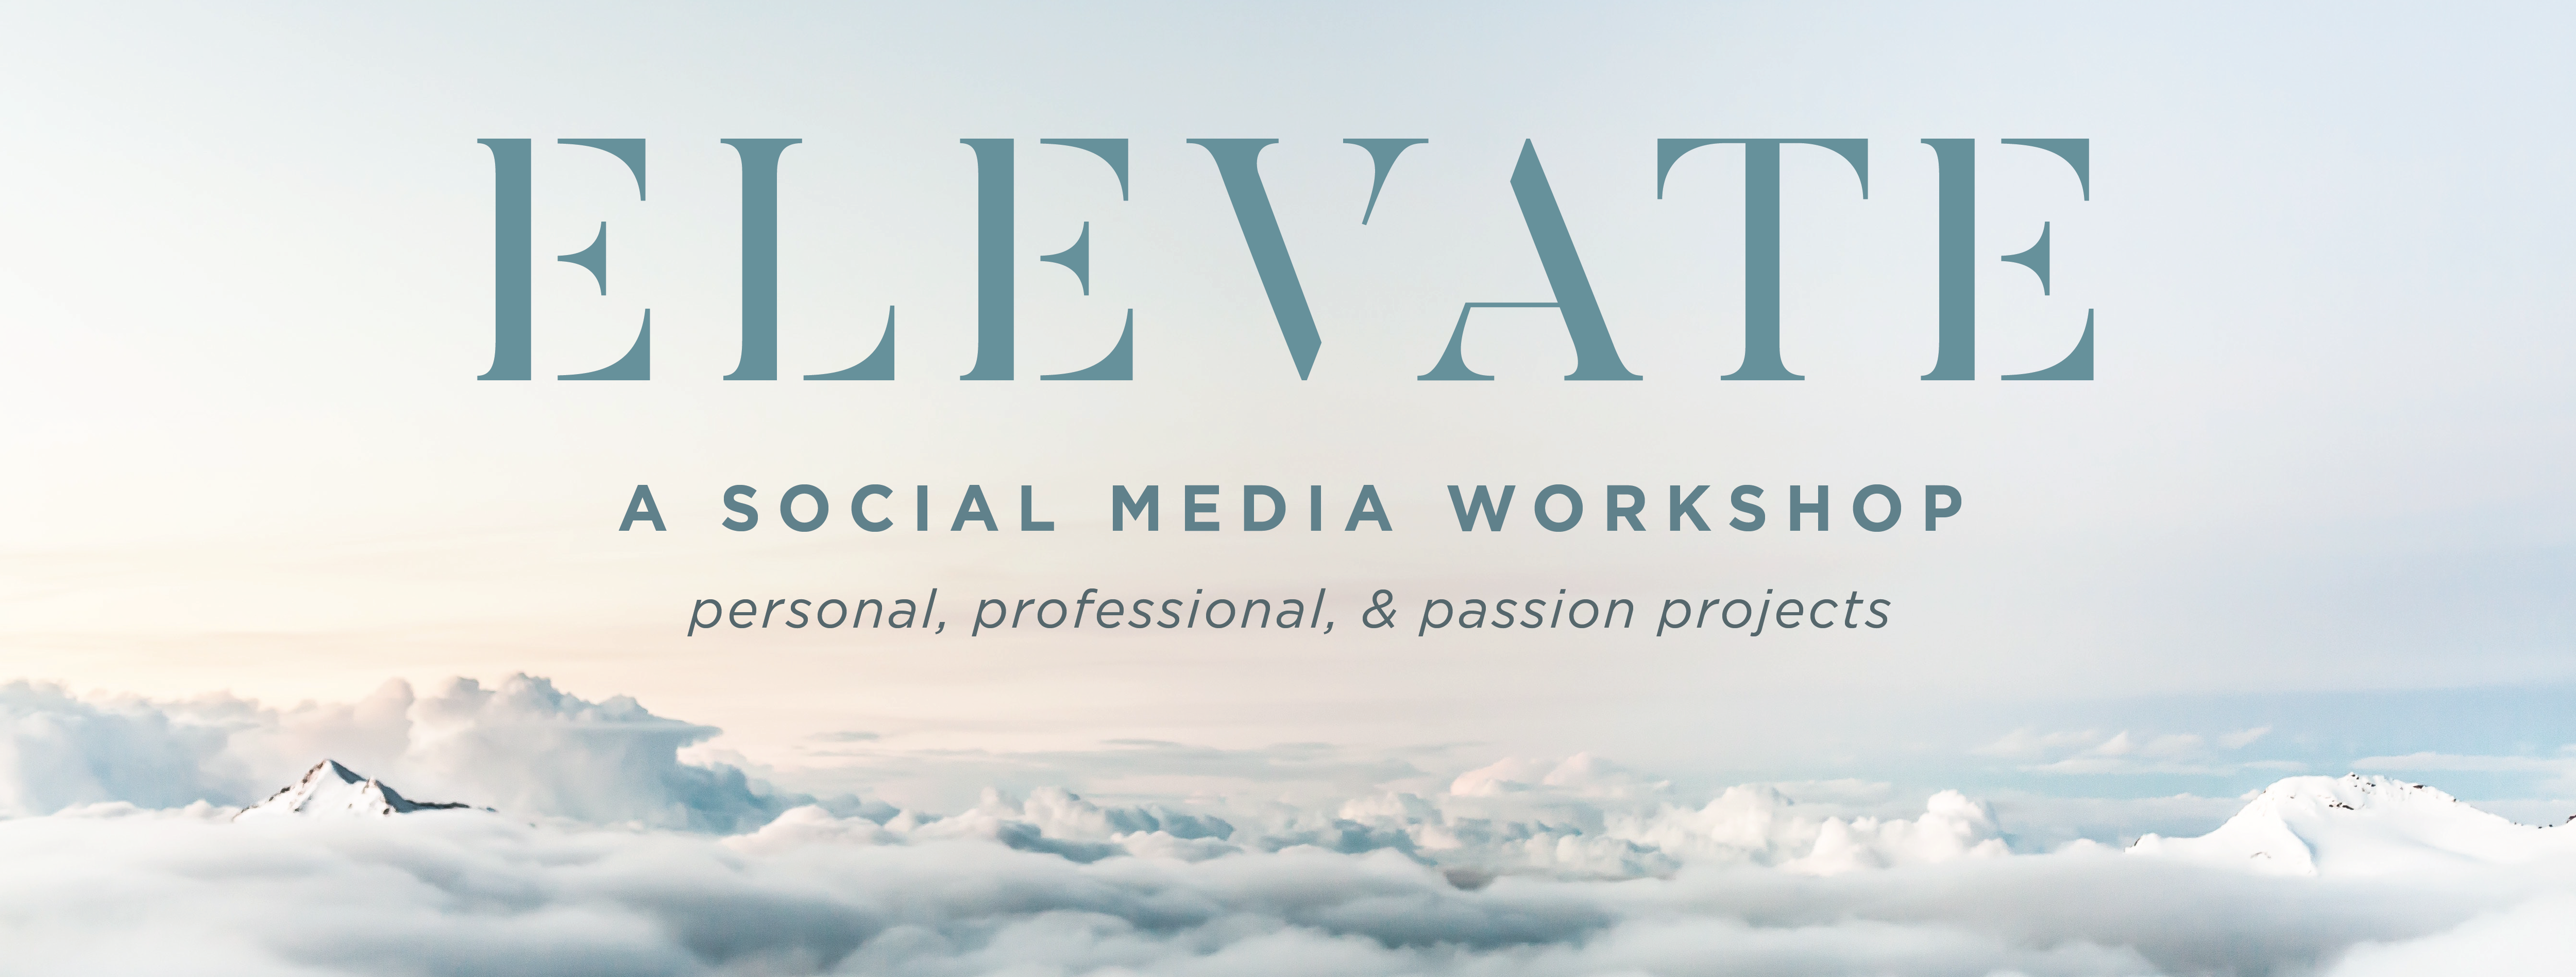 ELEVATE: a social media workshop